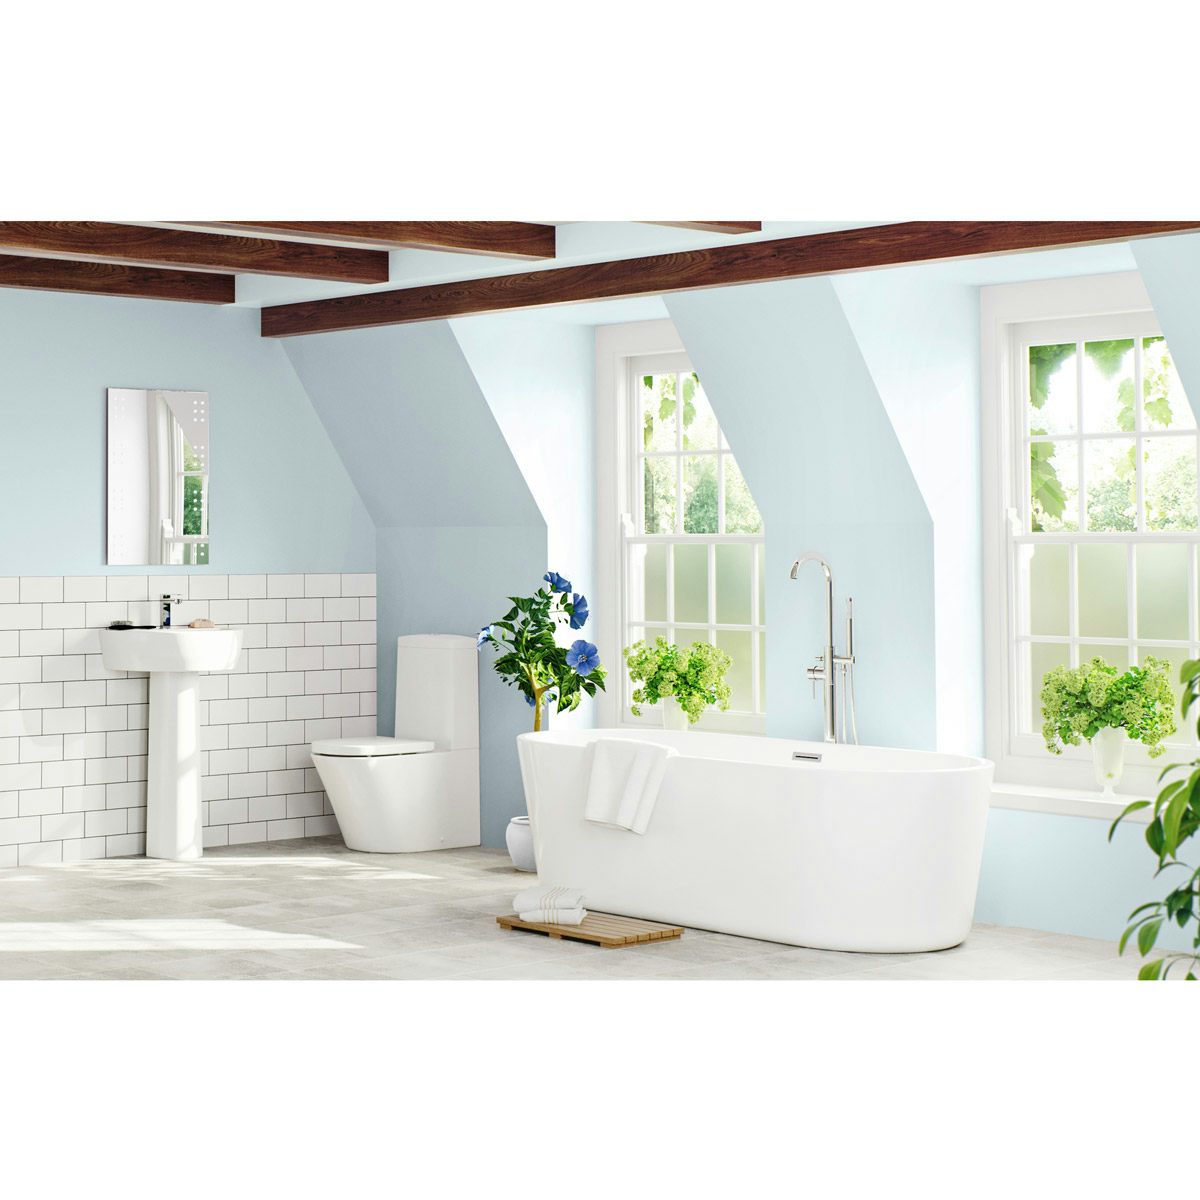 Mode Tate luxury bathroom suite with freestanding bath 1720 x 820